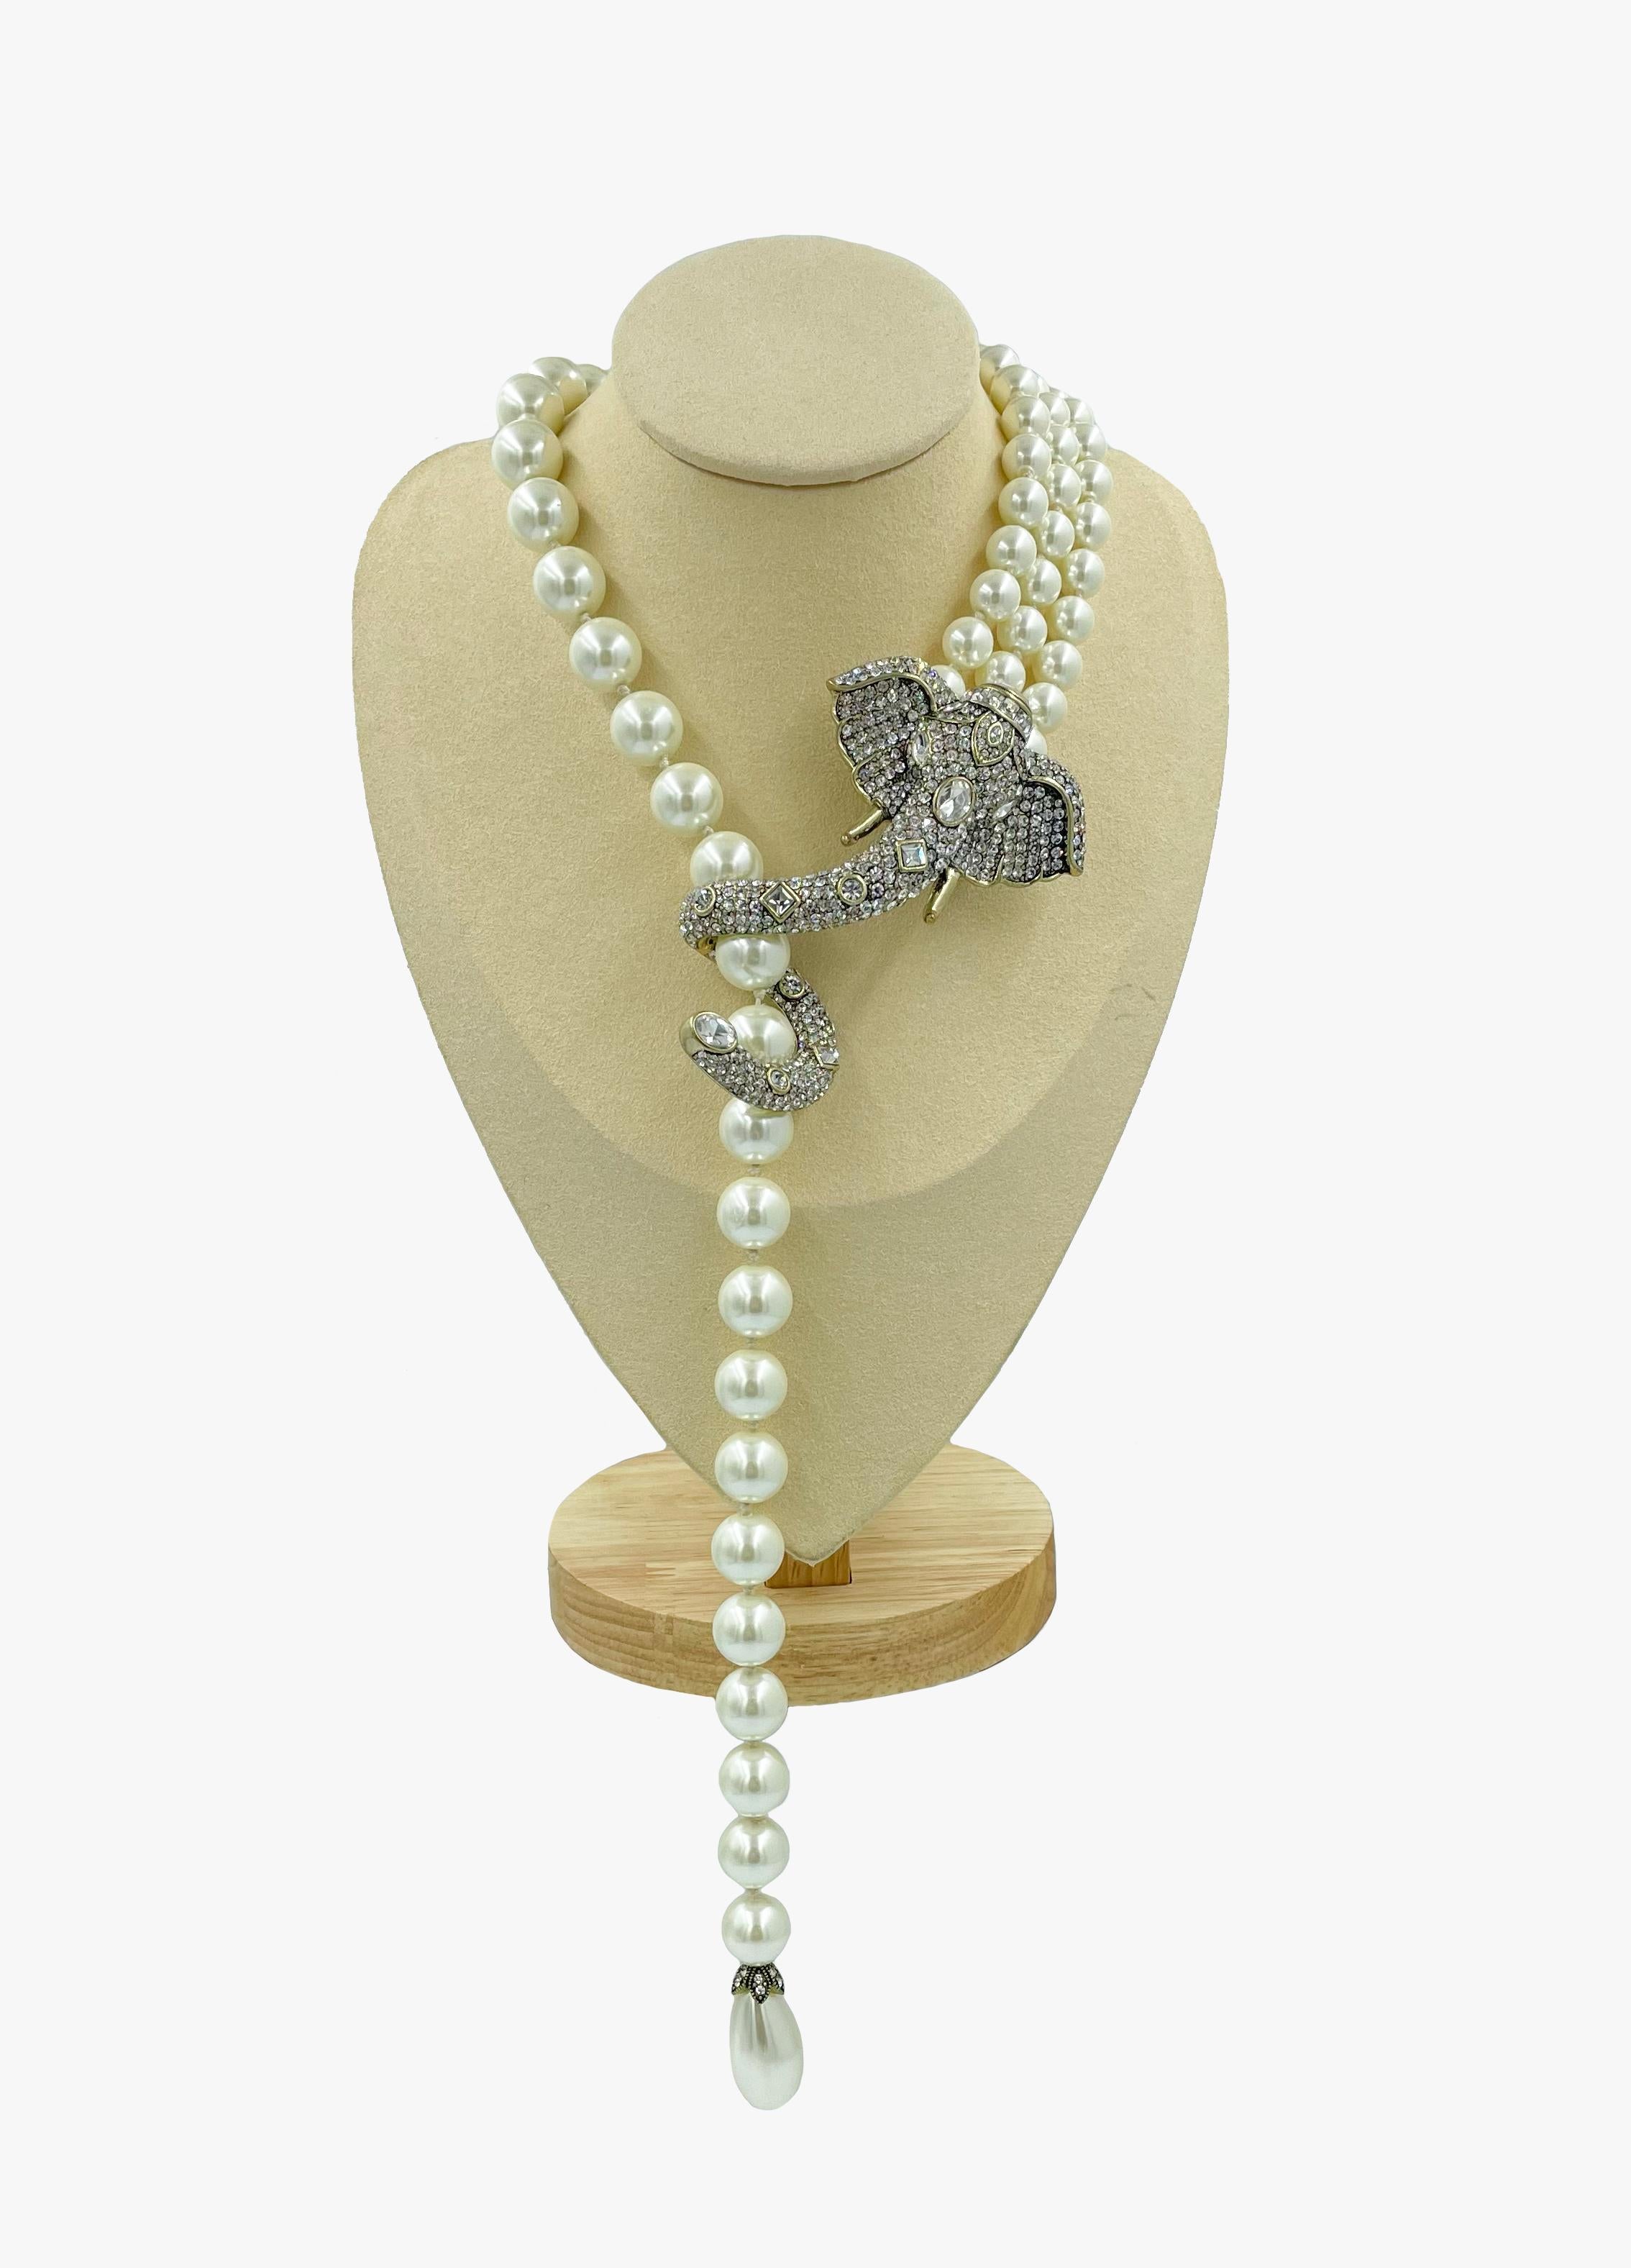 Art Deco Heidi Daus strass elephant faux pearl necklace  